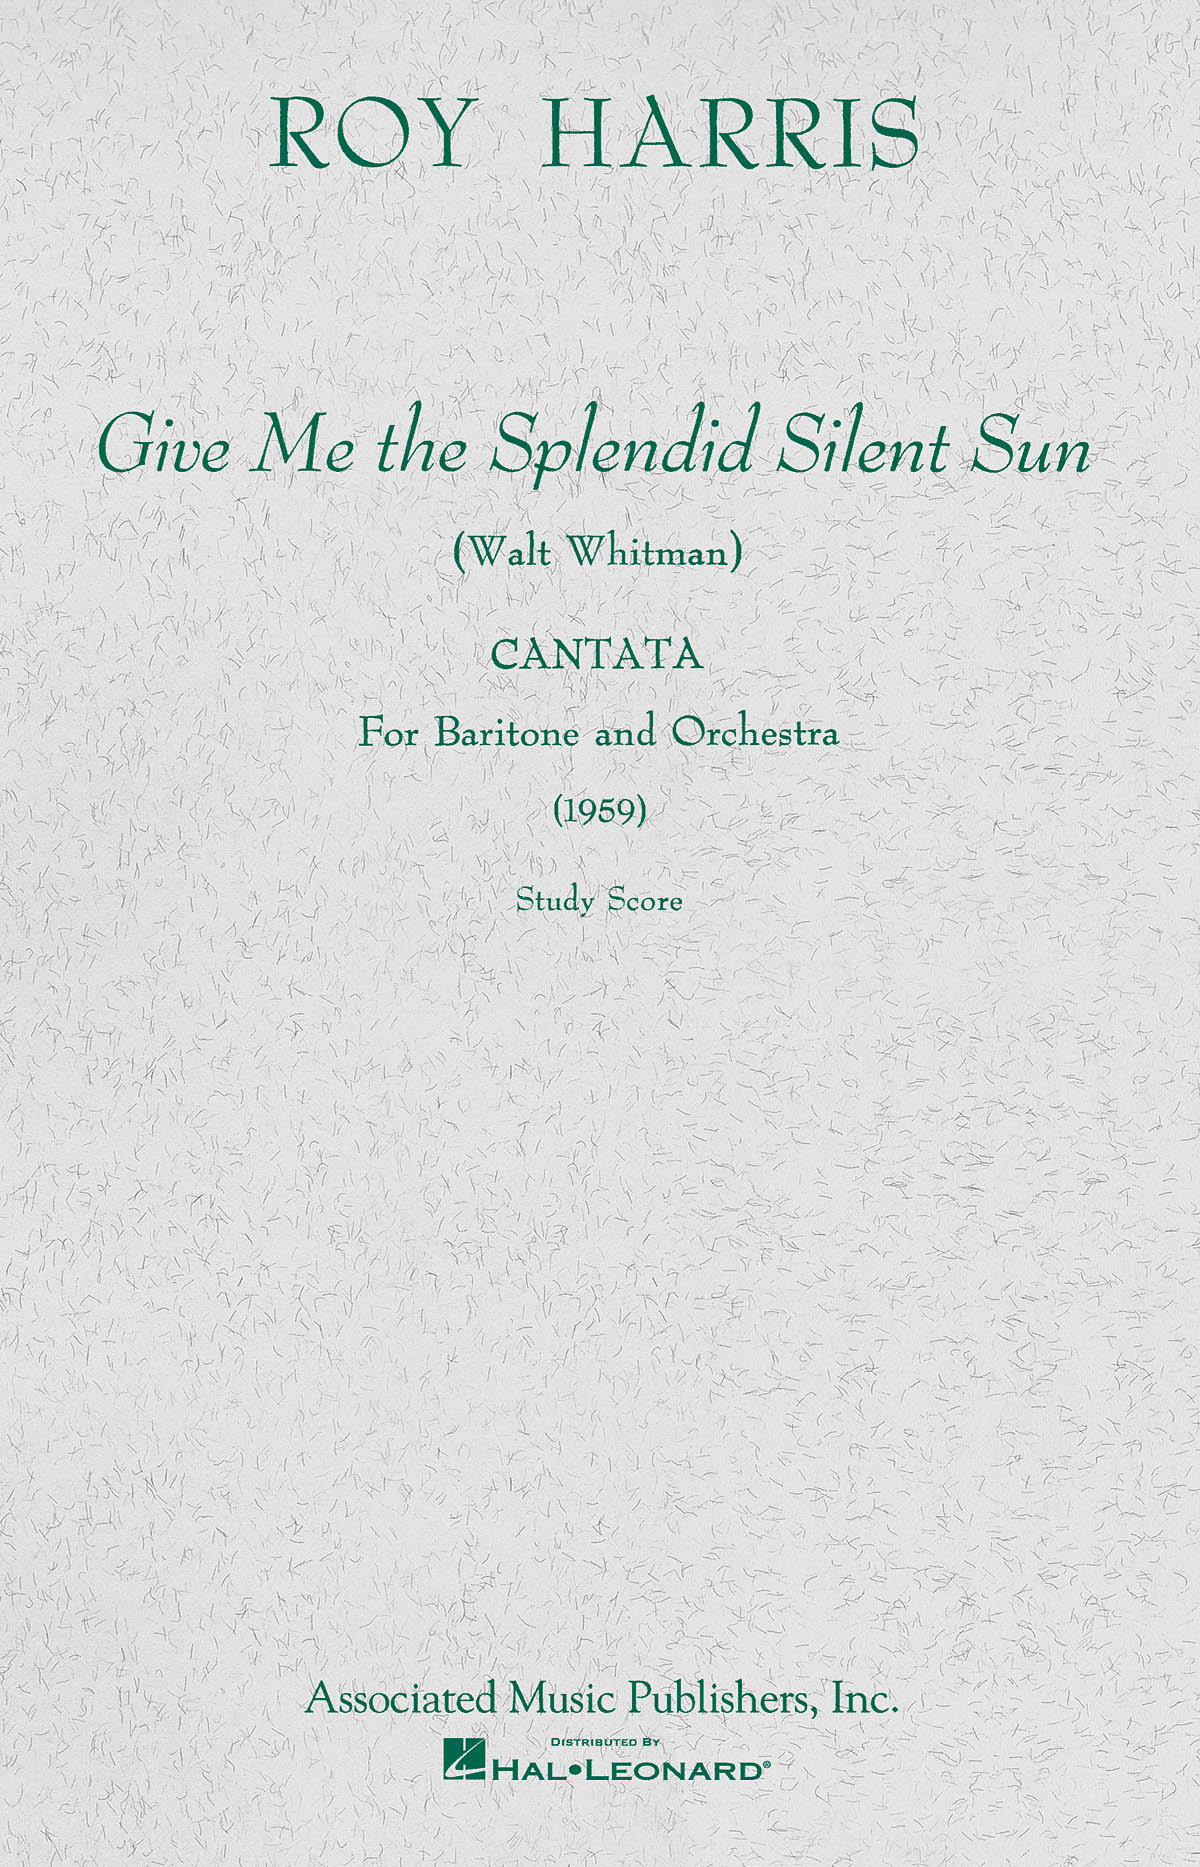 Roy Harris: Give Me the Splendid Silent Sun